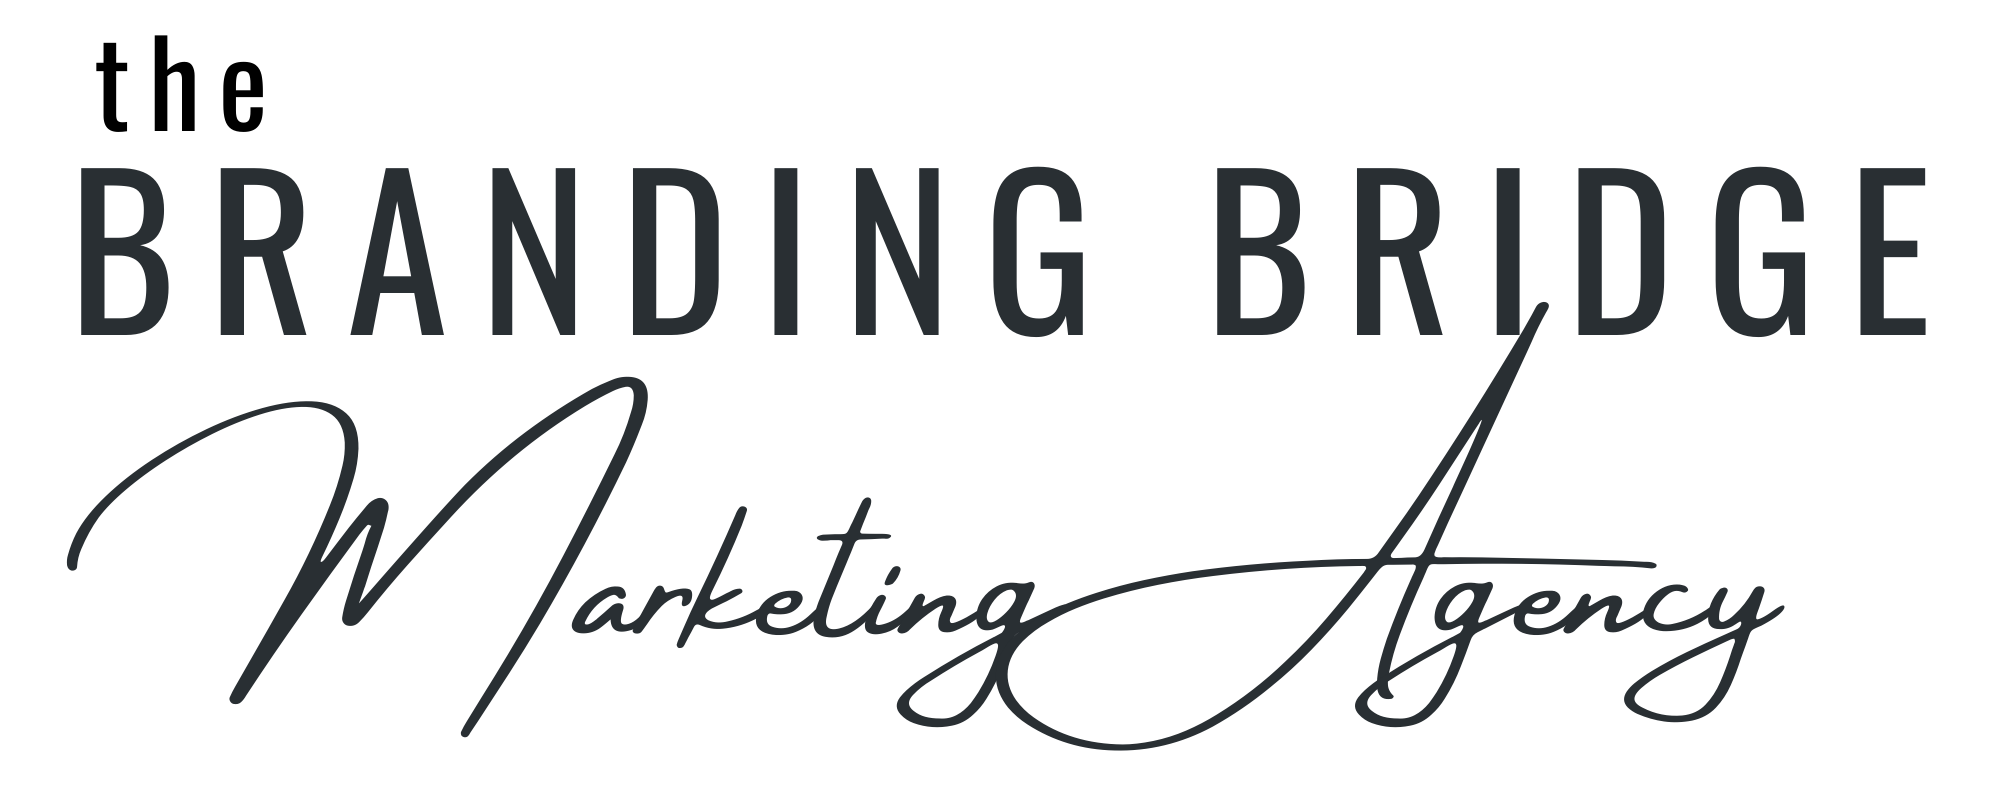 The Branding Bridge Marketing Agency in southeast Michigan